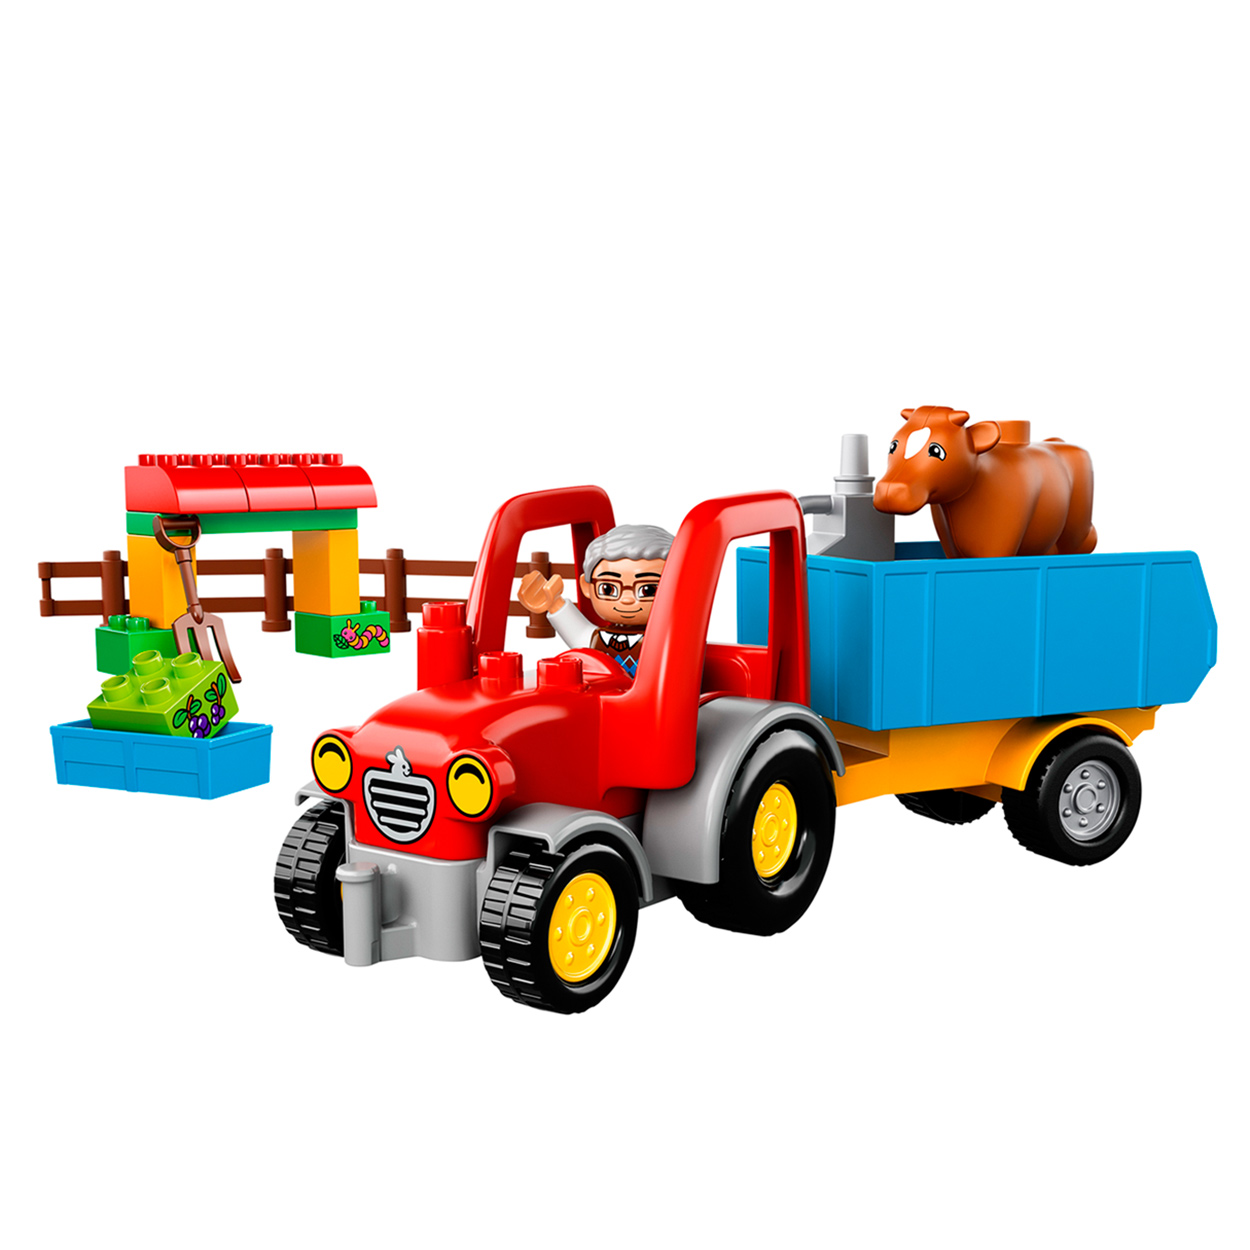 LEGO DUPLO LEGOville 10524 Landbouwtractor